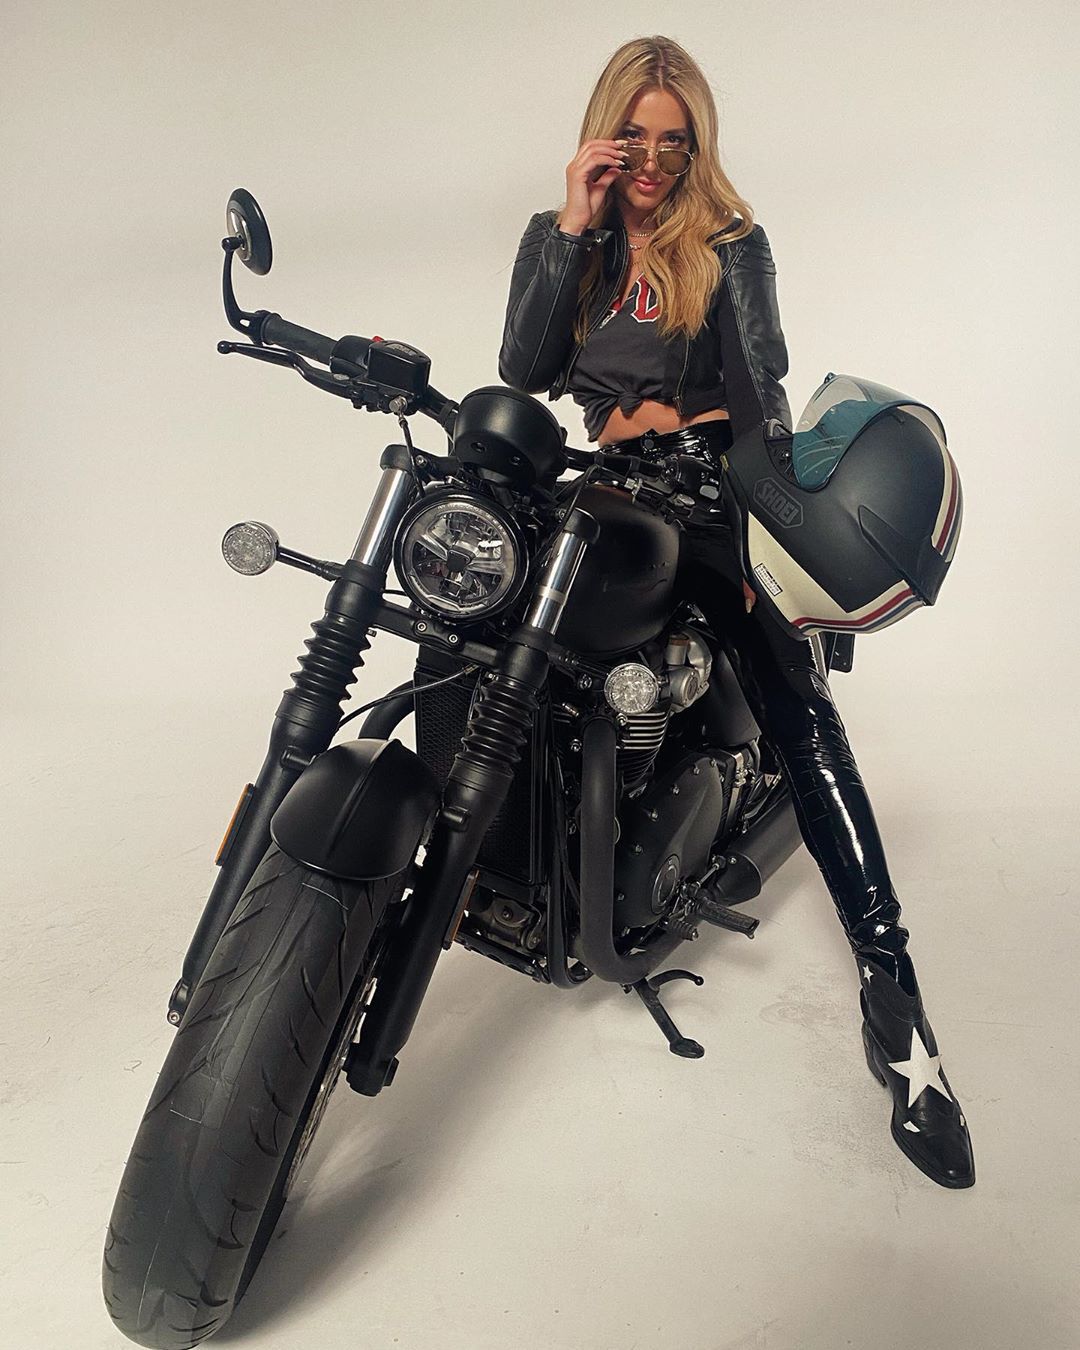 Marcelina Zawadzka na motorze